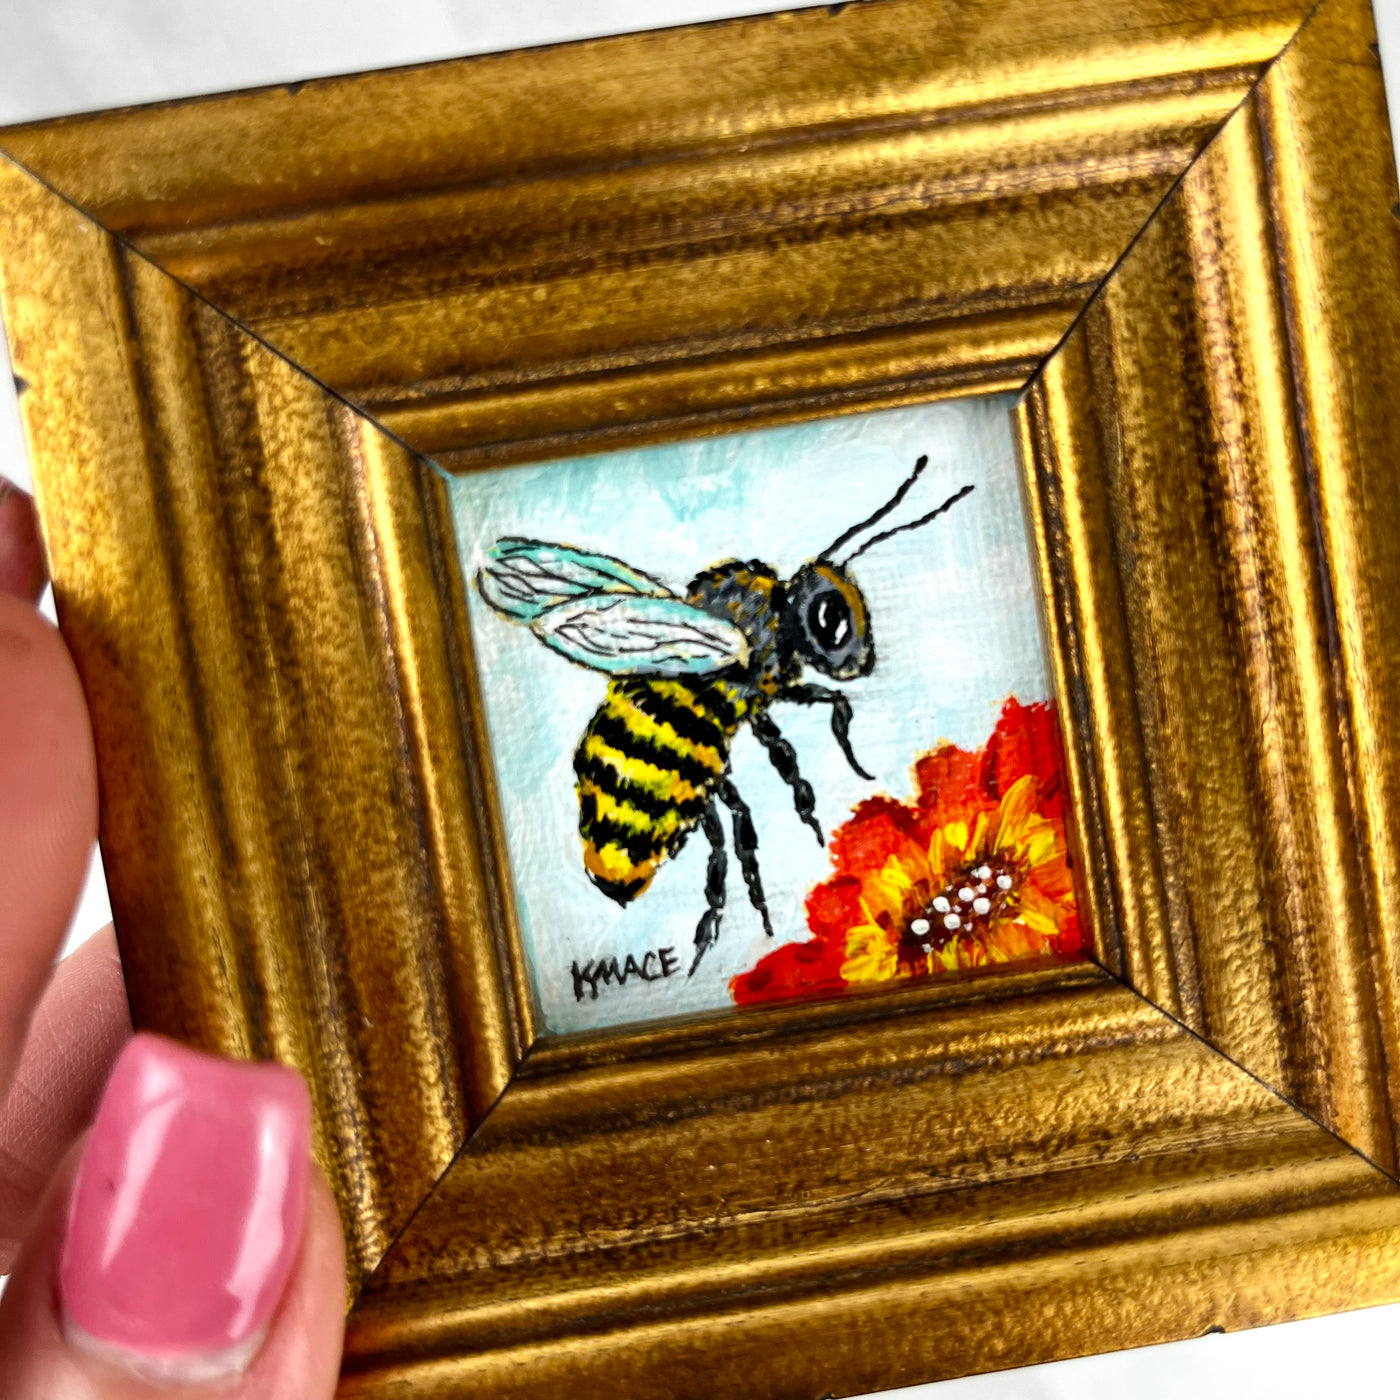 Original Painting - "Sweet as Honey"